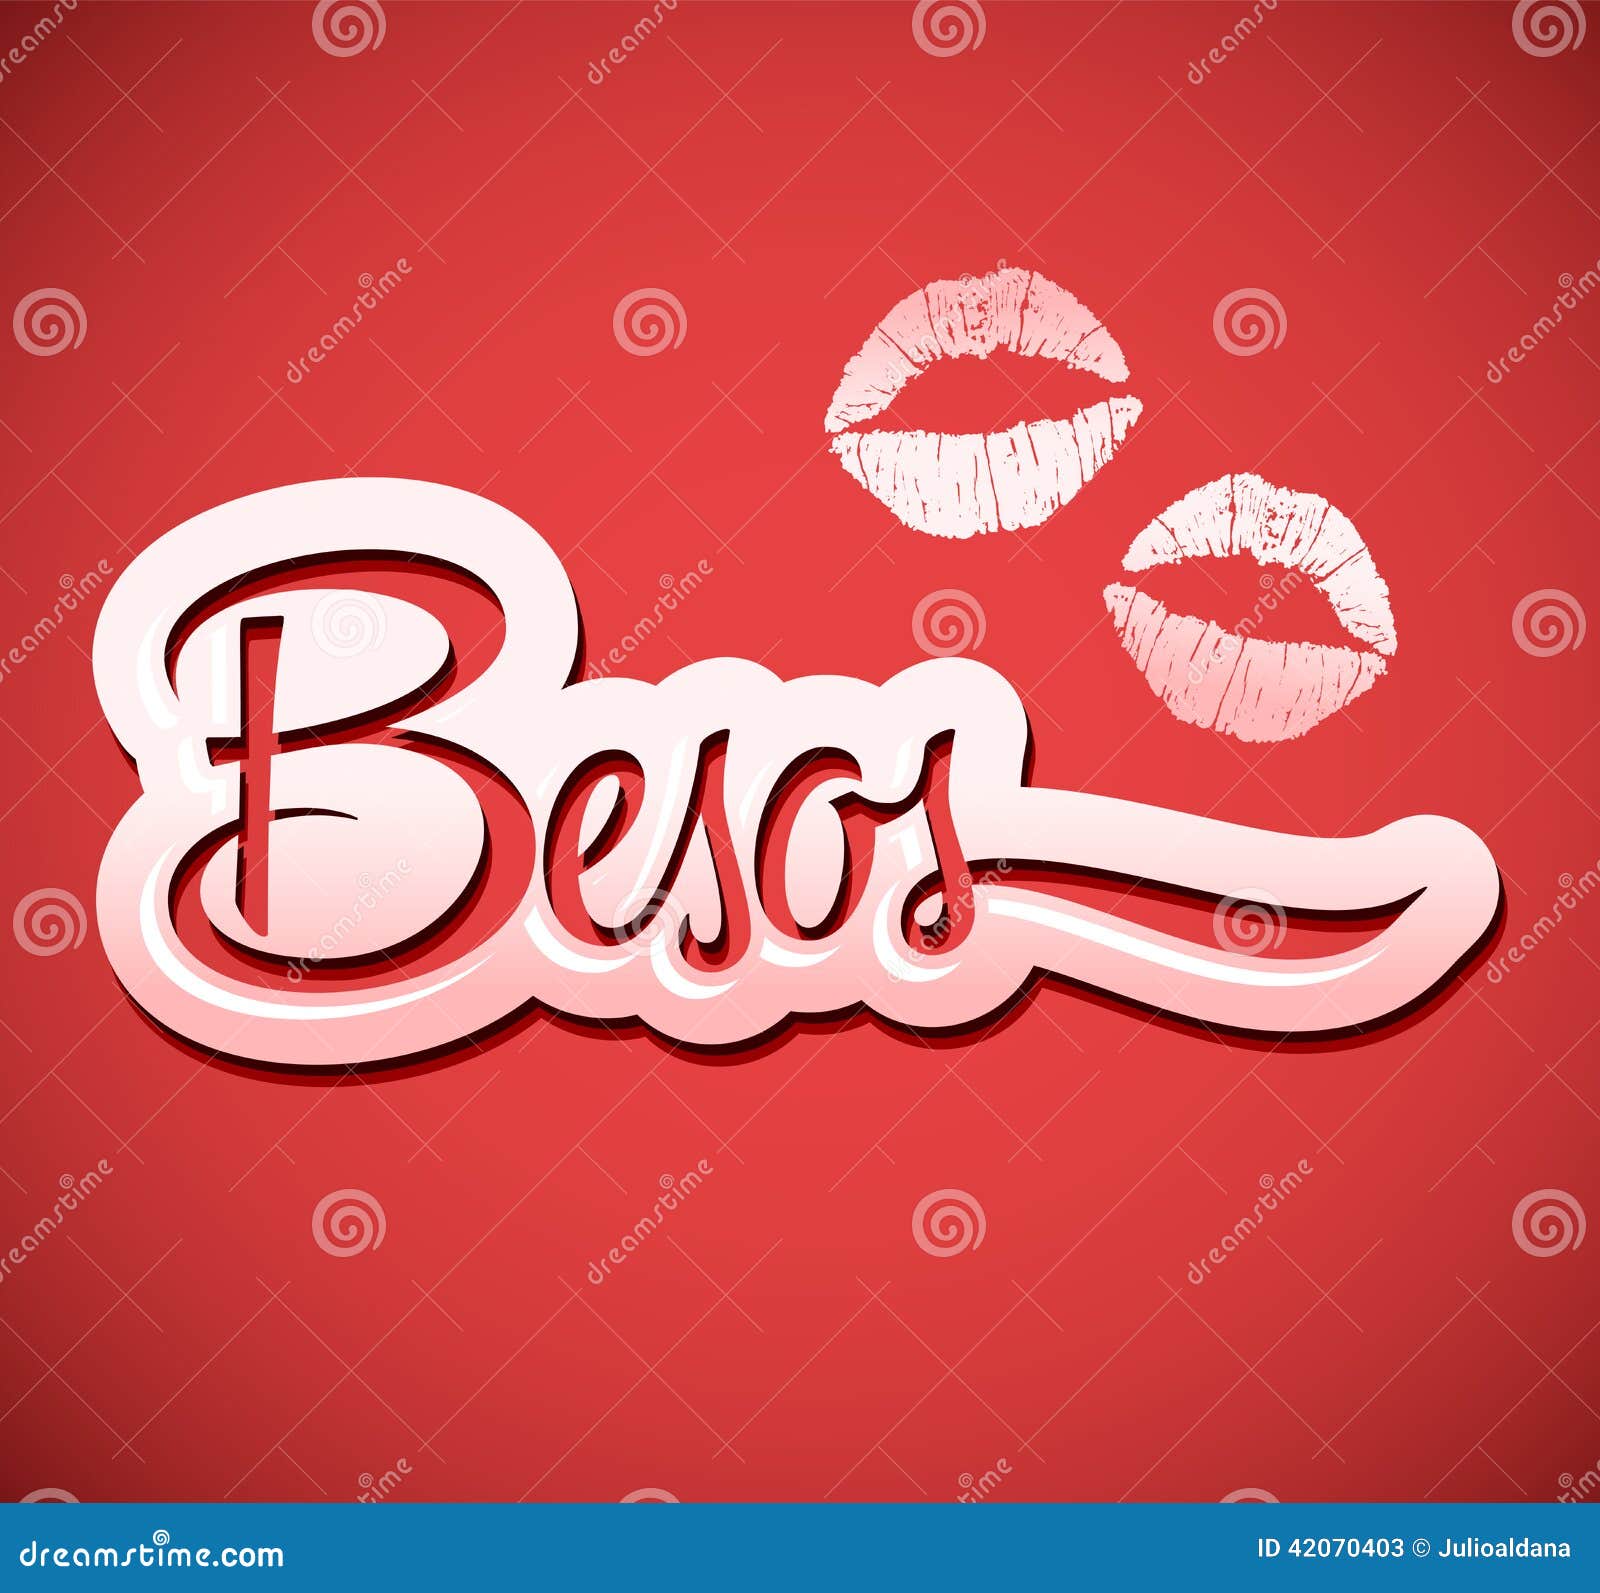 besos - kisses spanish text